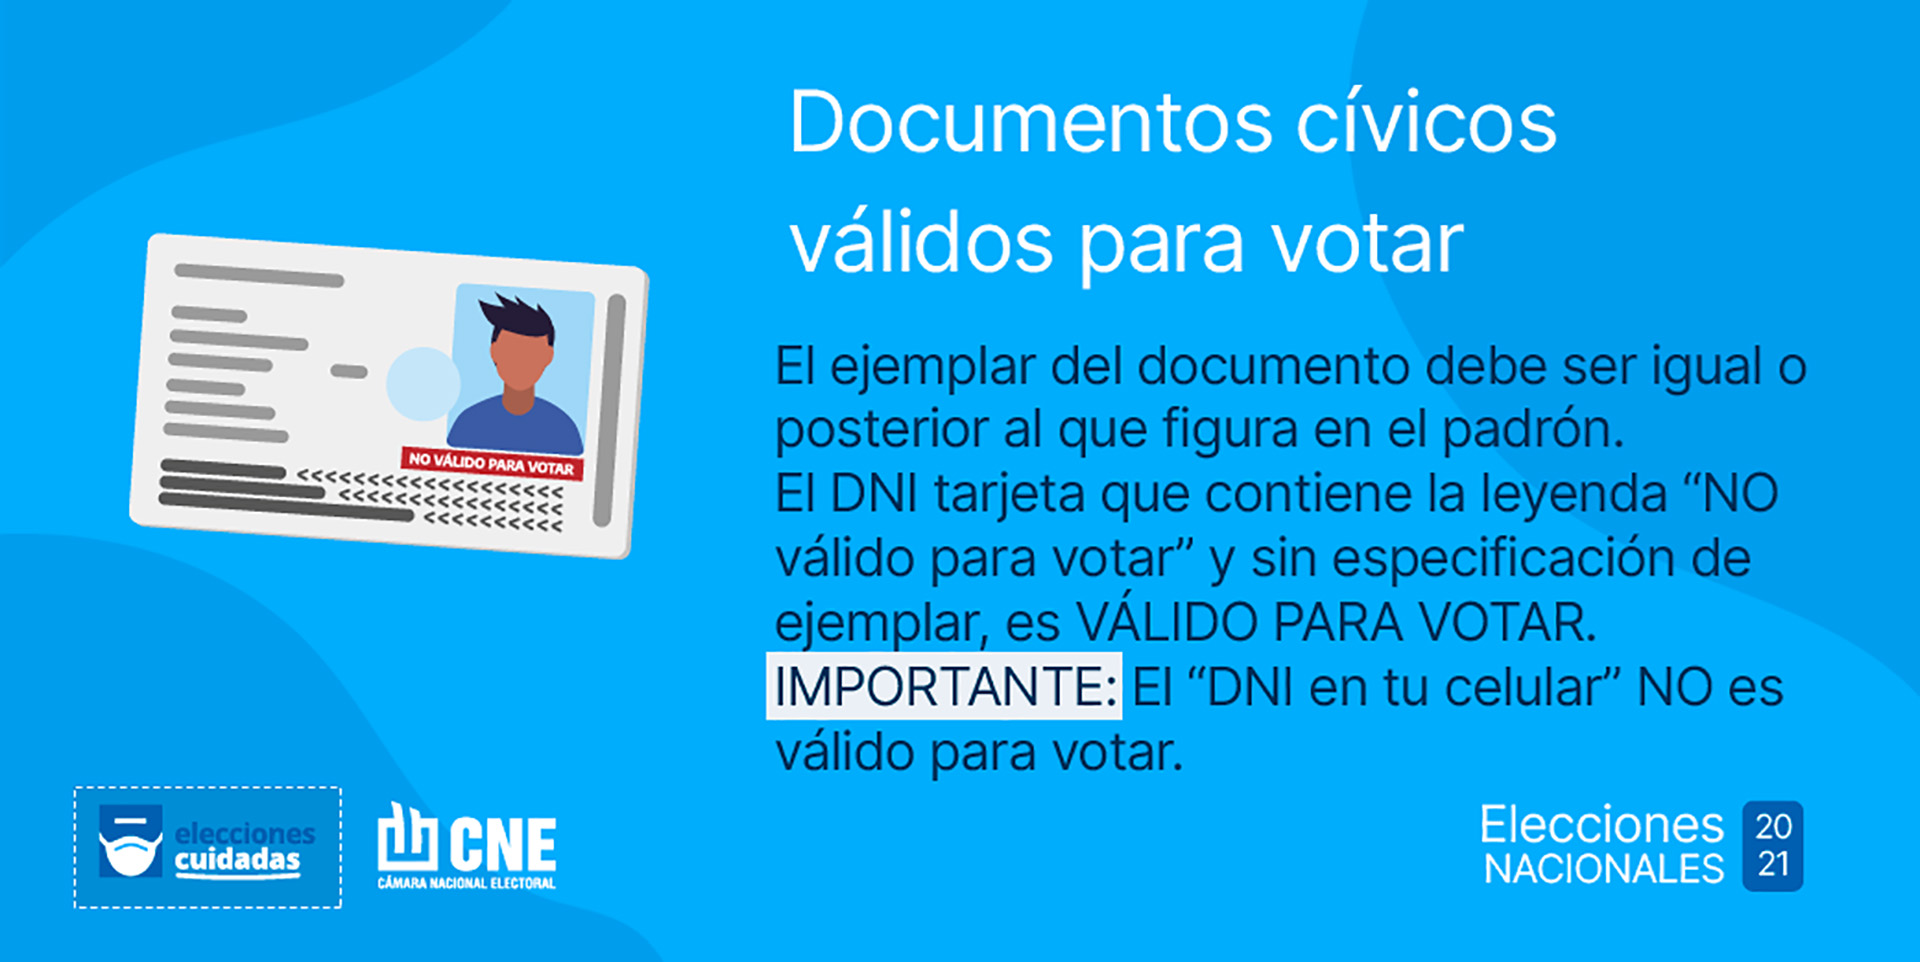 Documentos válidos para votar: libreta cívica, libreta de enrolamiento, DNI libreta verde, DNI libreta celeste y DNI tarjeta